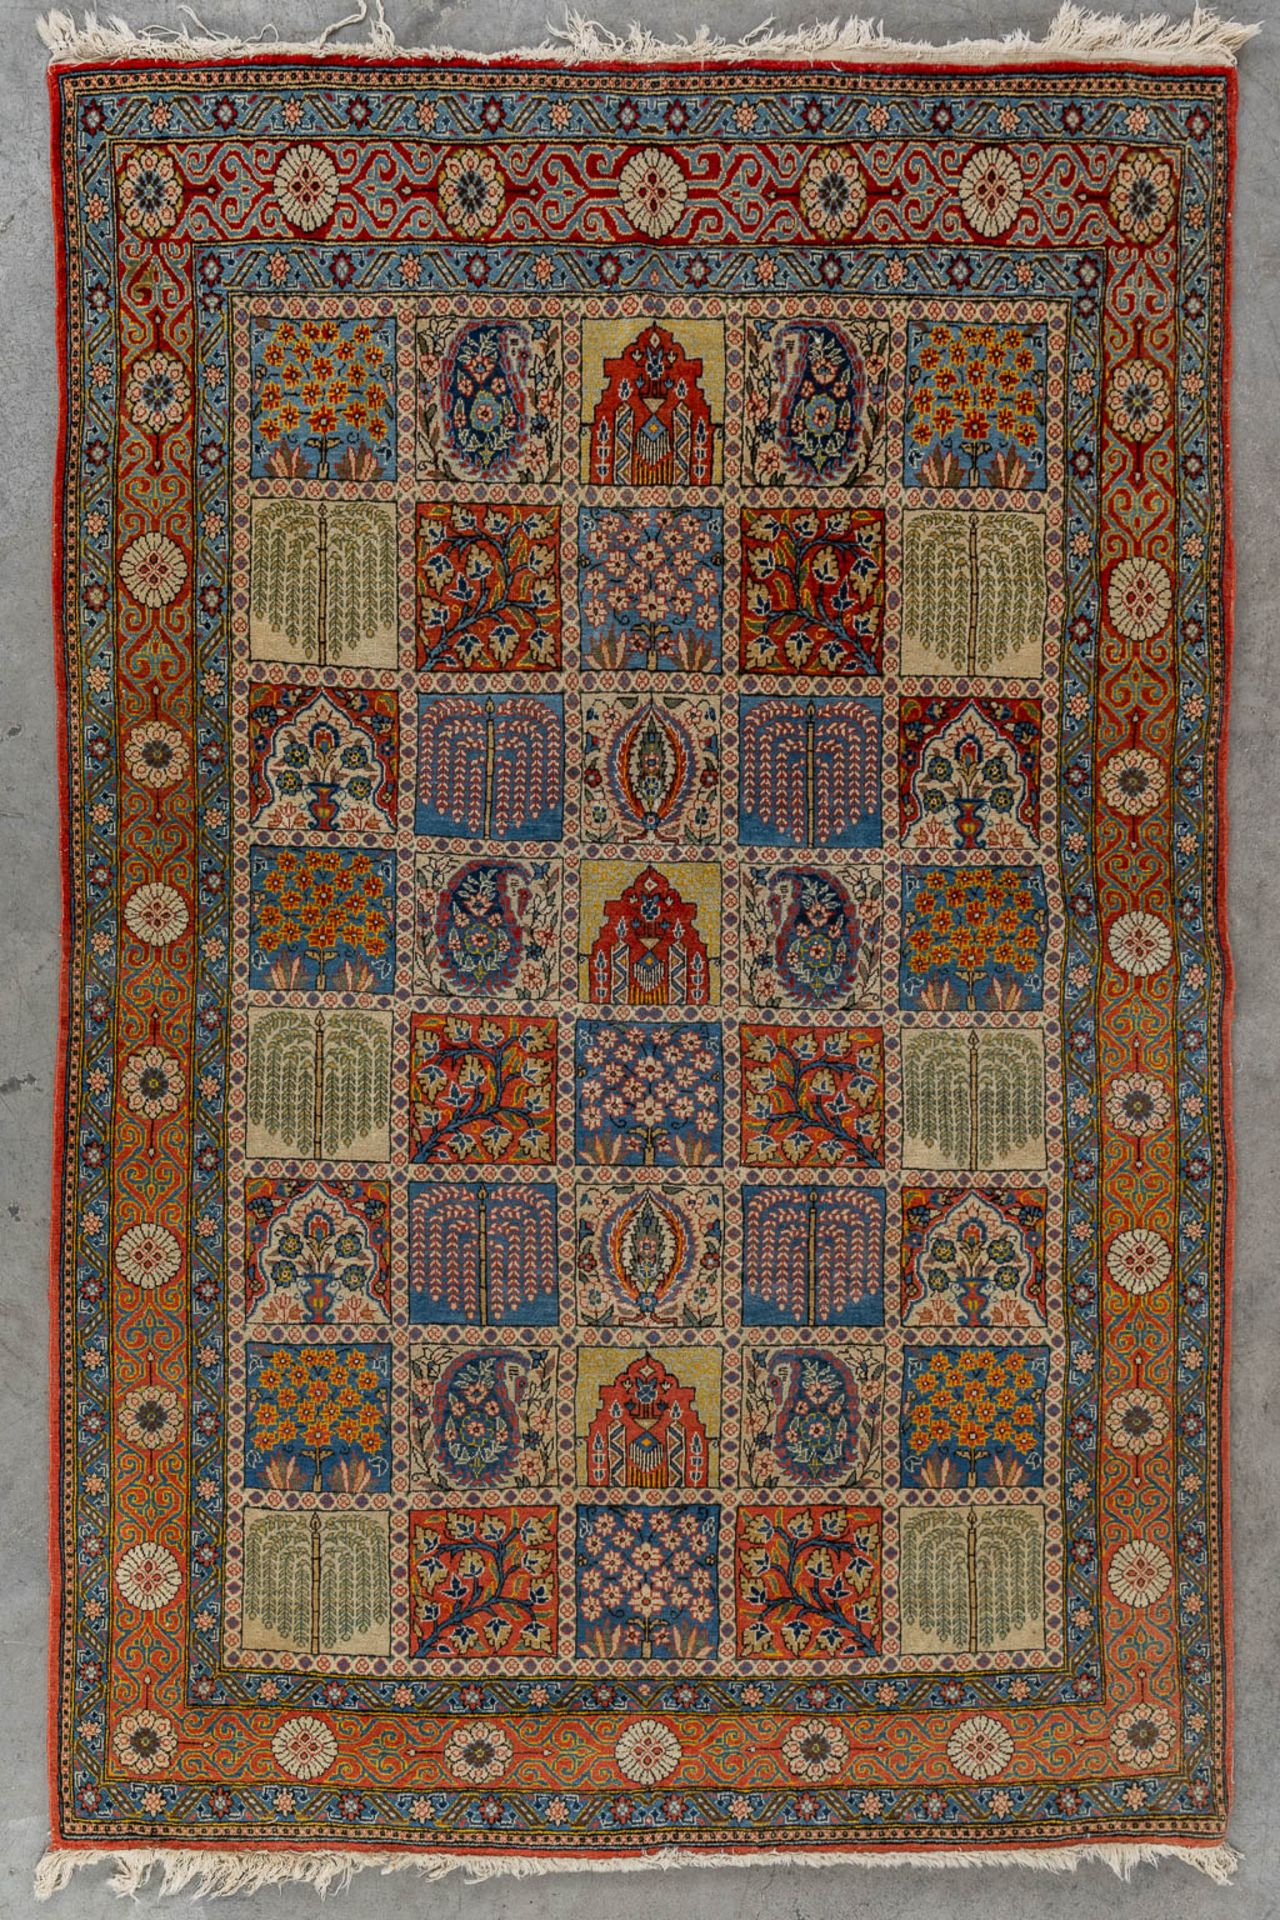 An Oriental hand-made carpet, Ghoum. (L:202 x W:135 cm)